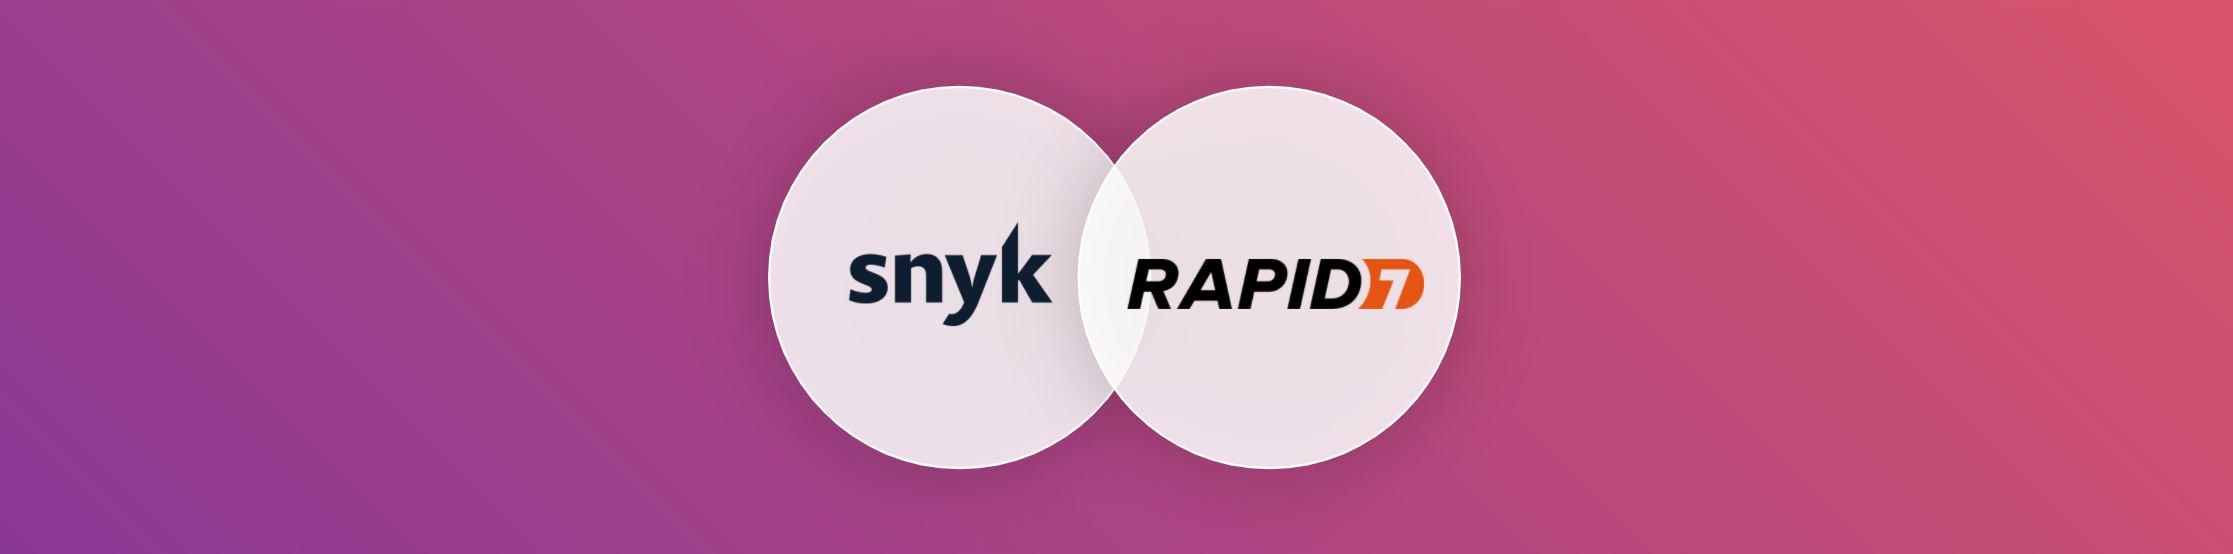 wordpress-sync/snyk-rapid7